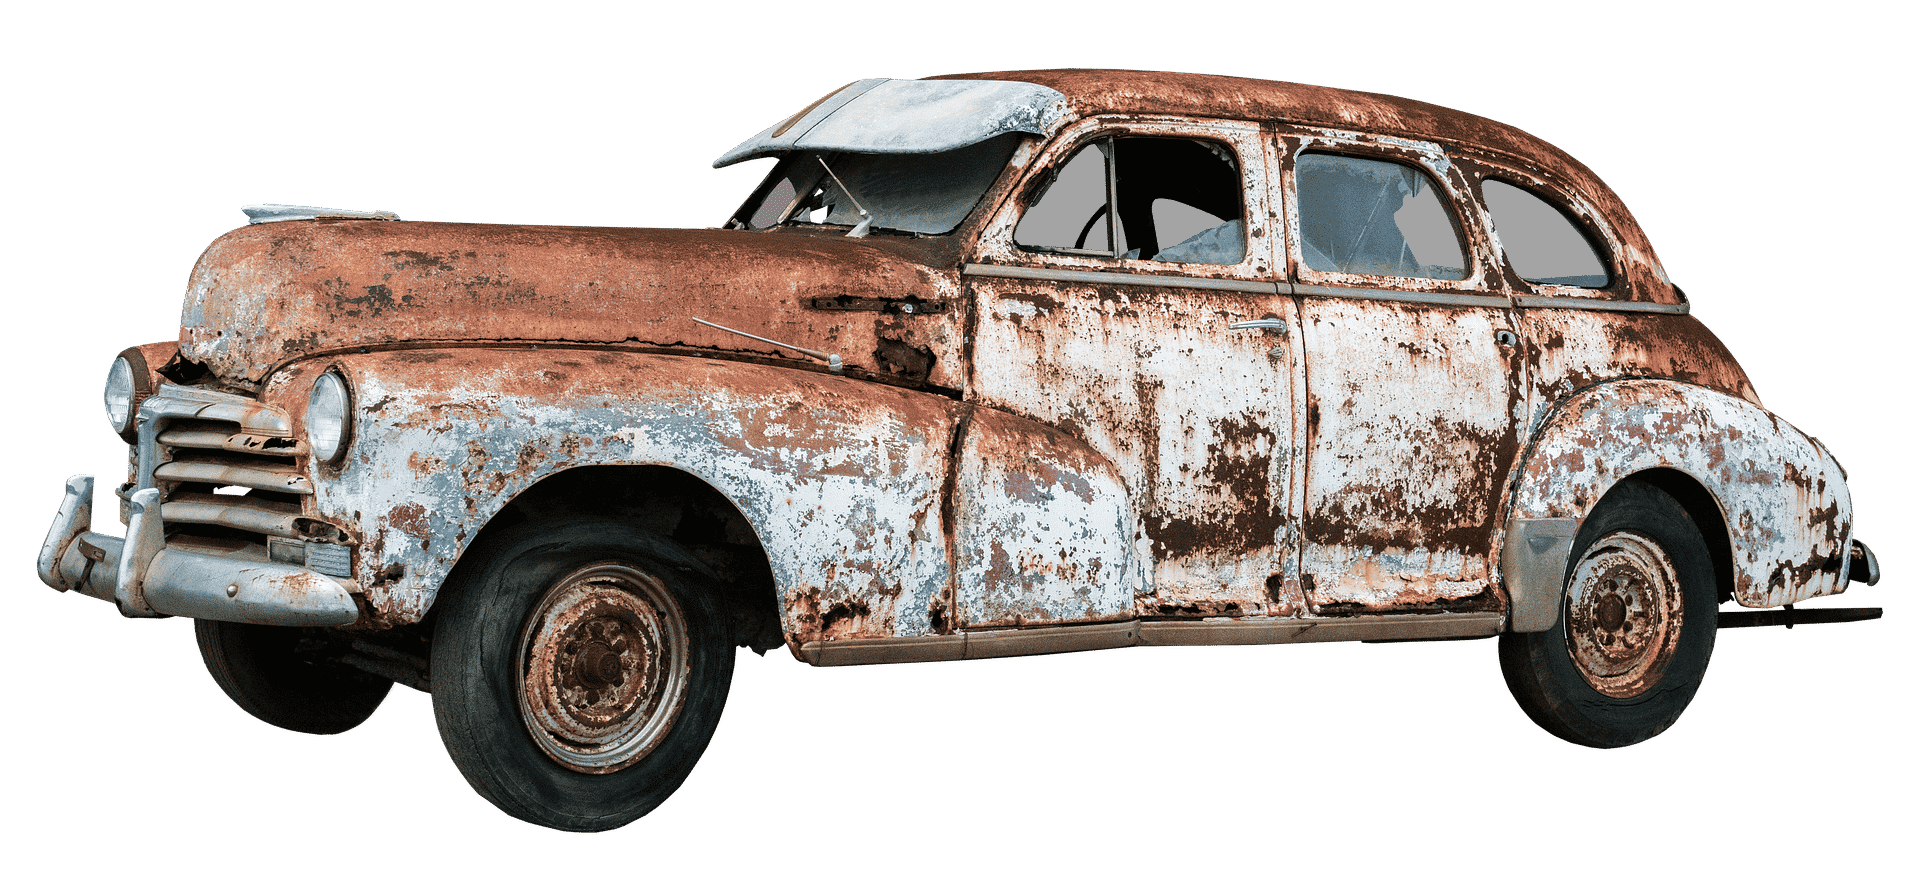 Rust american cars фото 44